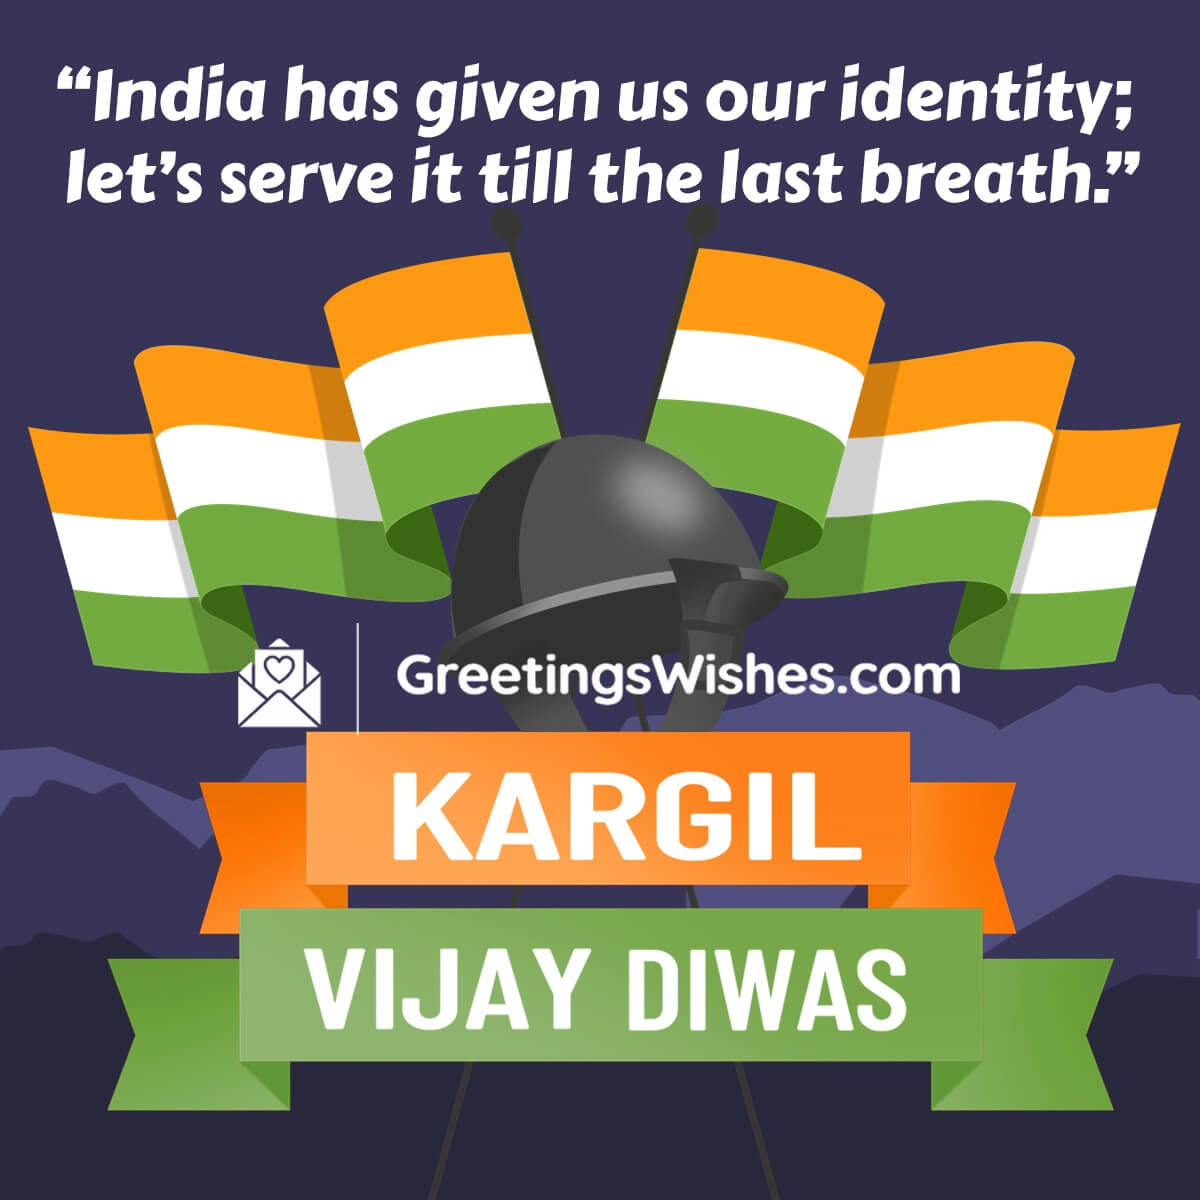 Kargil Vijay Diwas Quotes